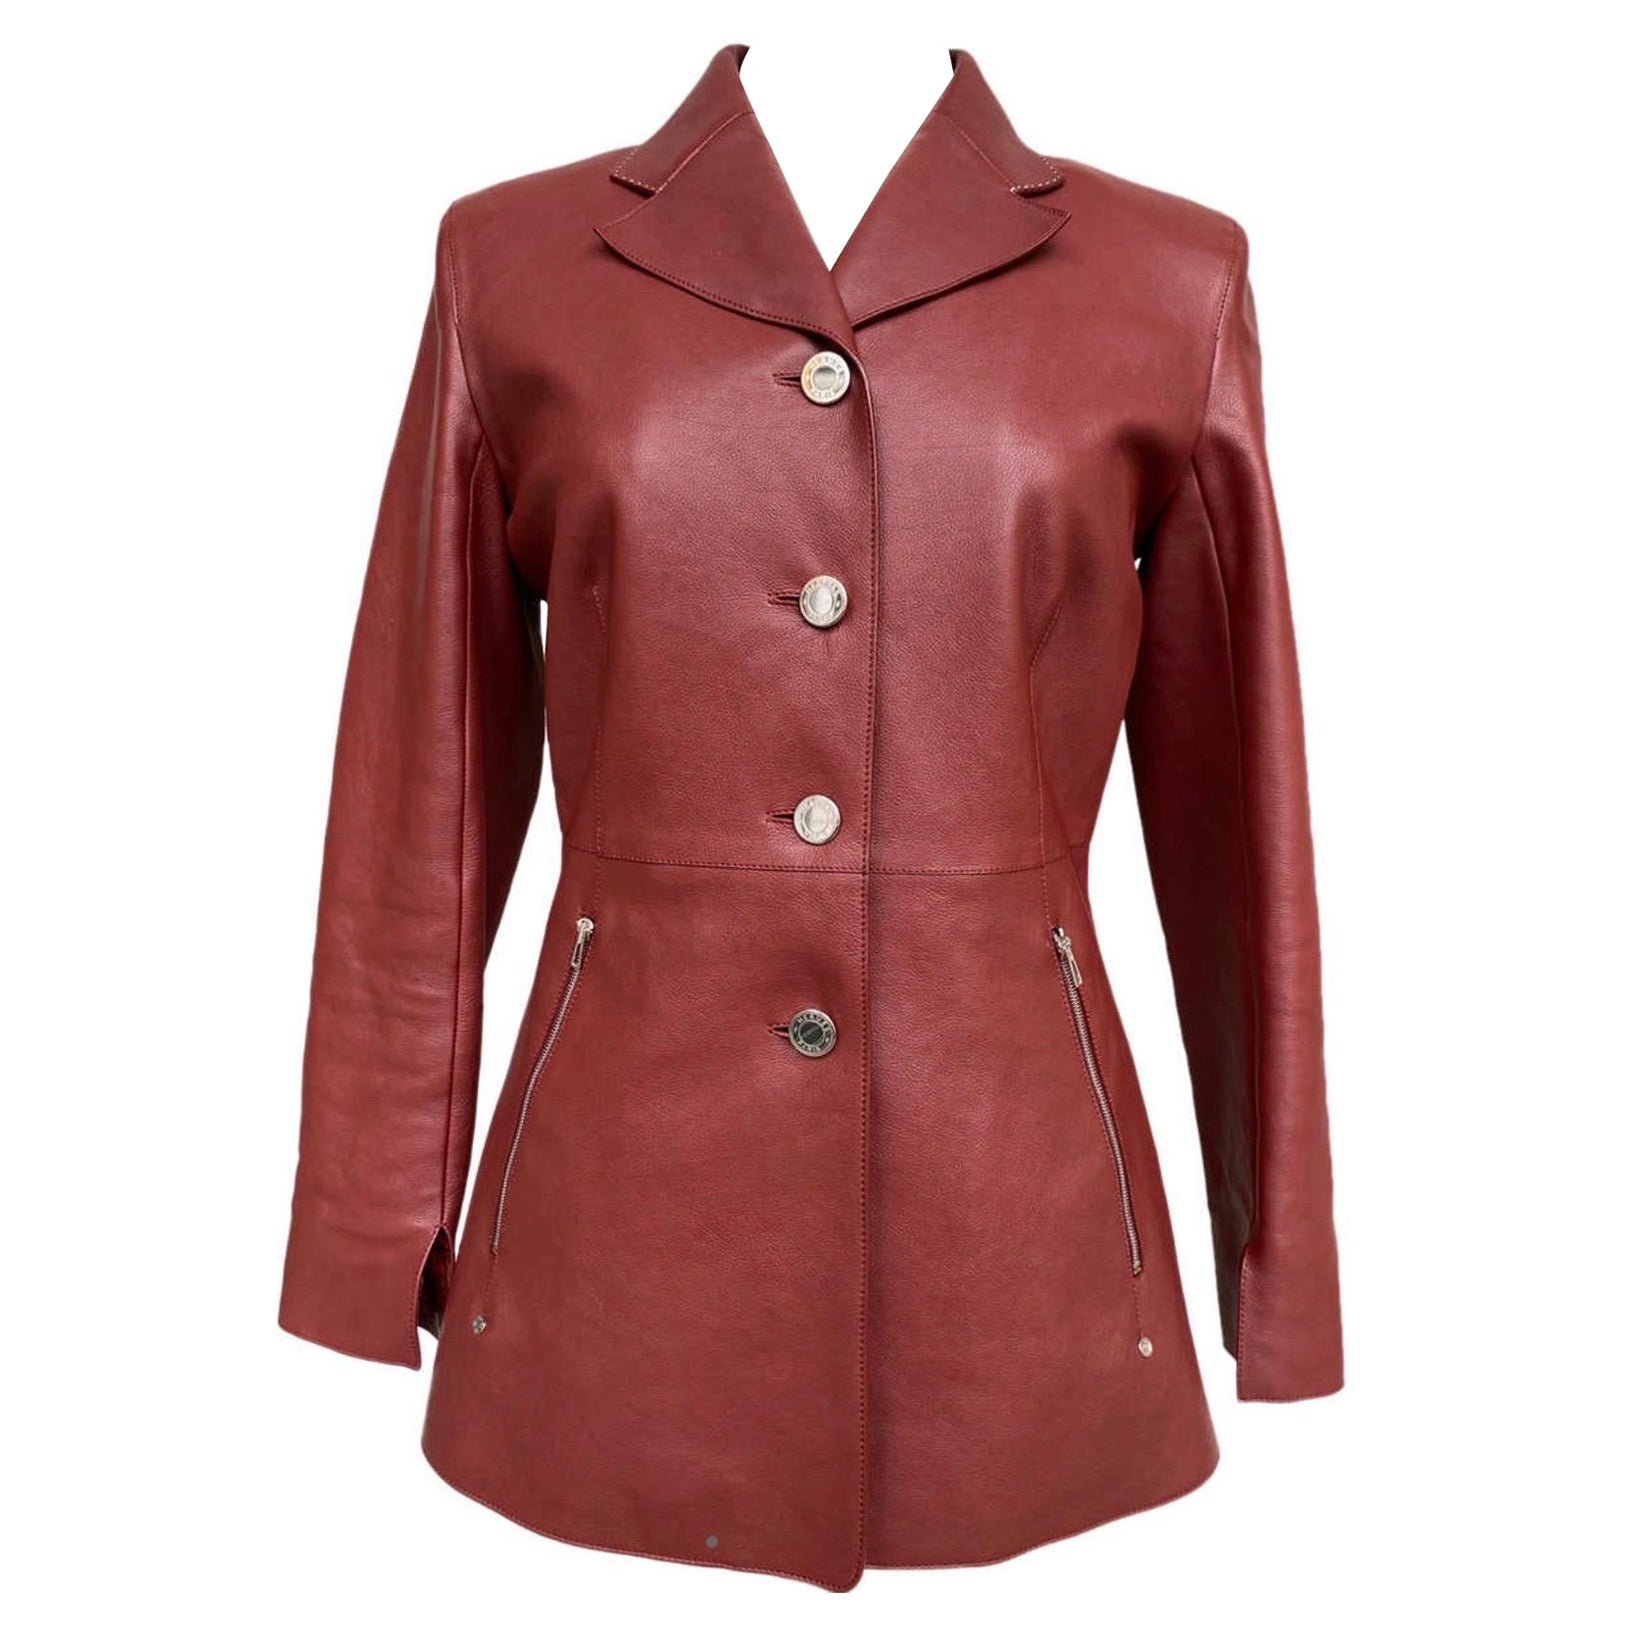 Hermes burgundy leather jacket 